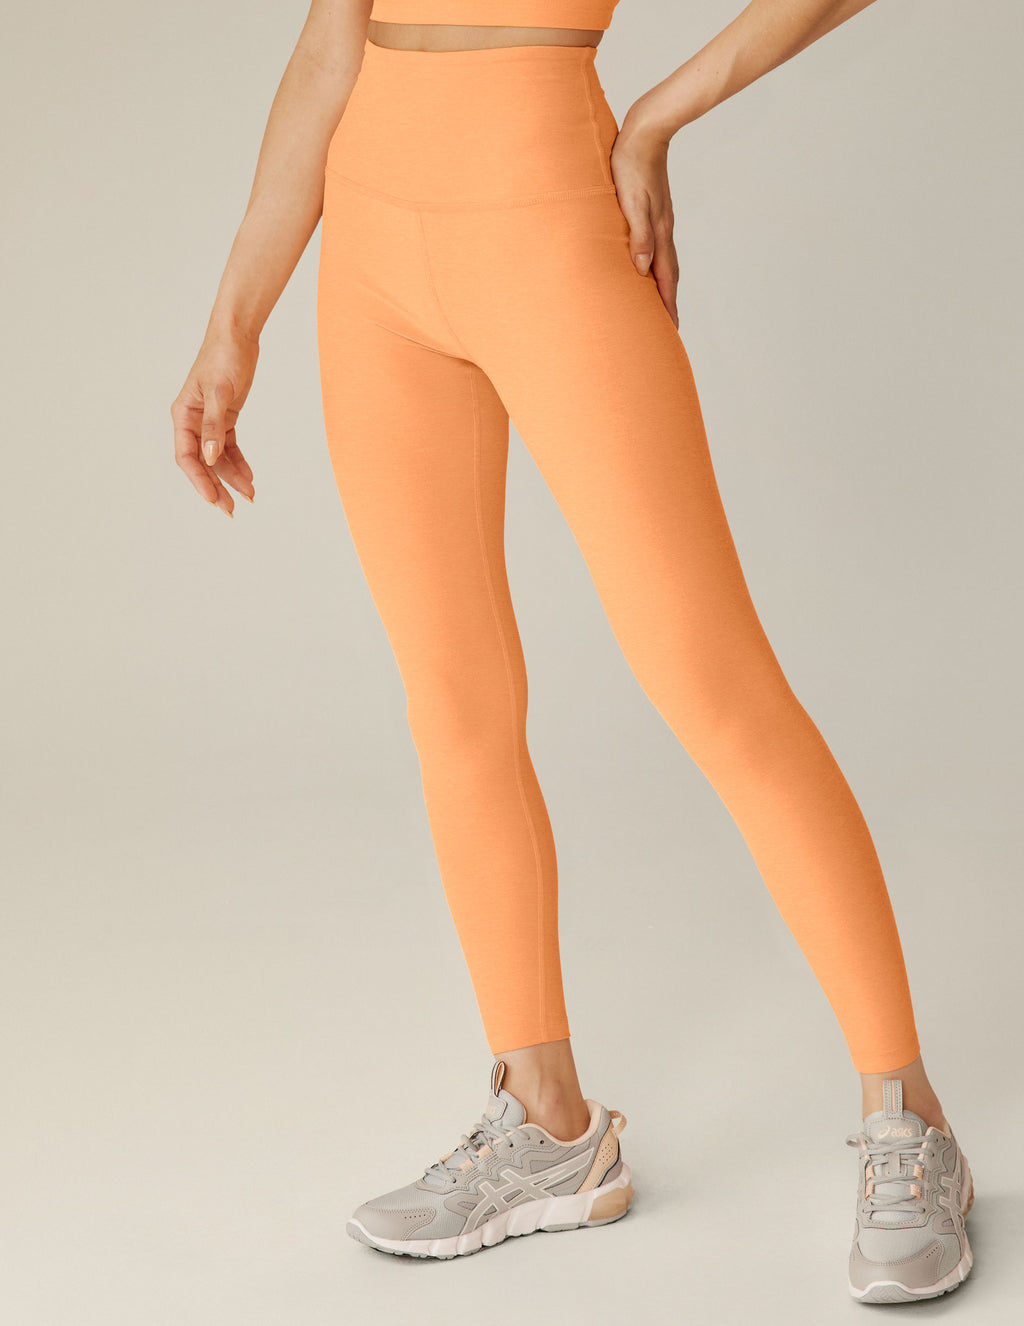 Girlfriend Collective Burnt Orange seamless high waist leggings XL NWT